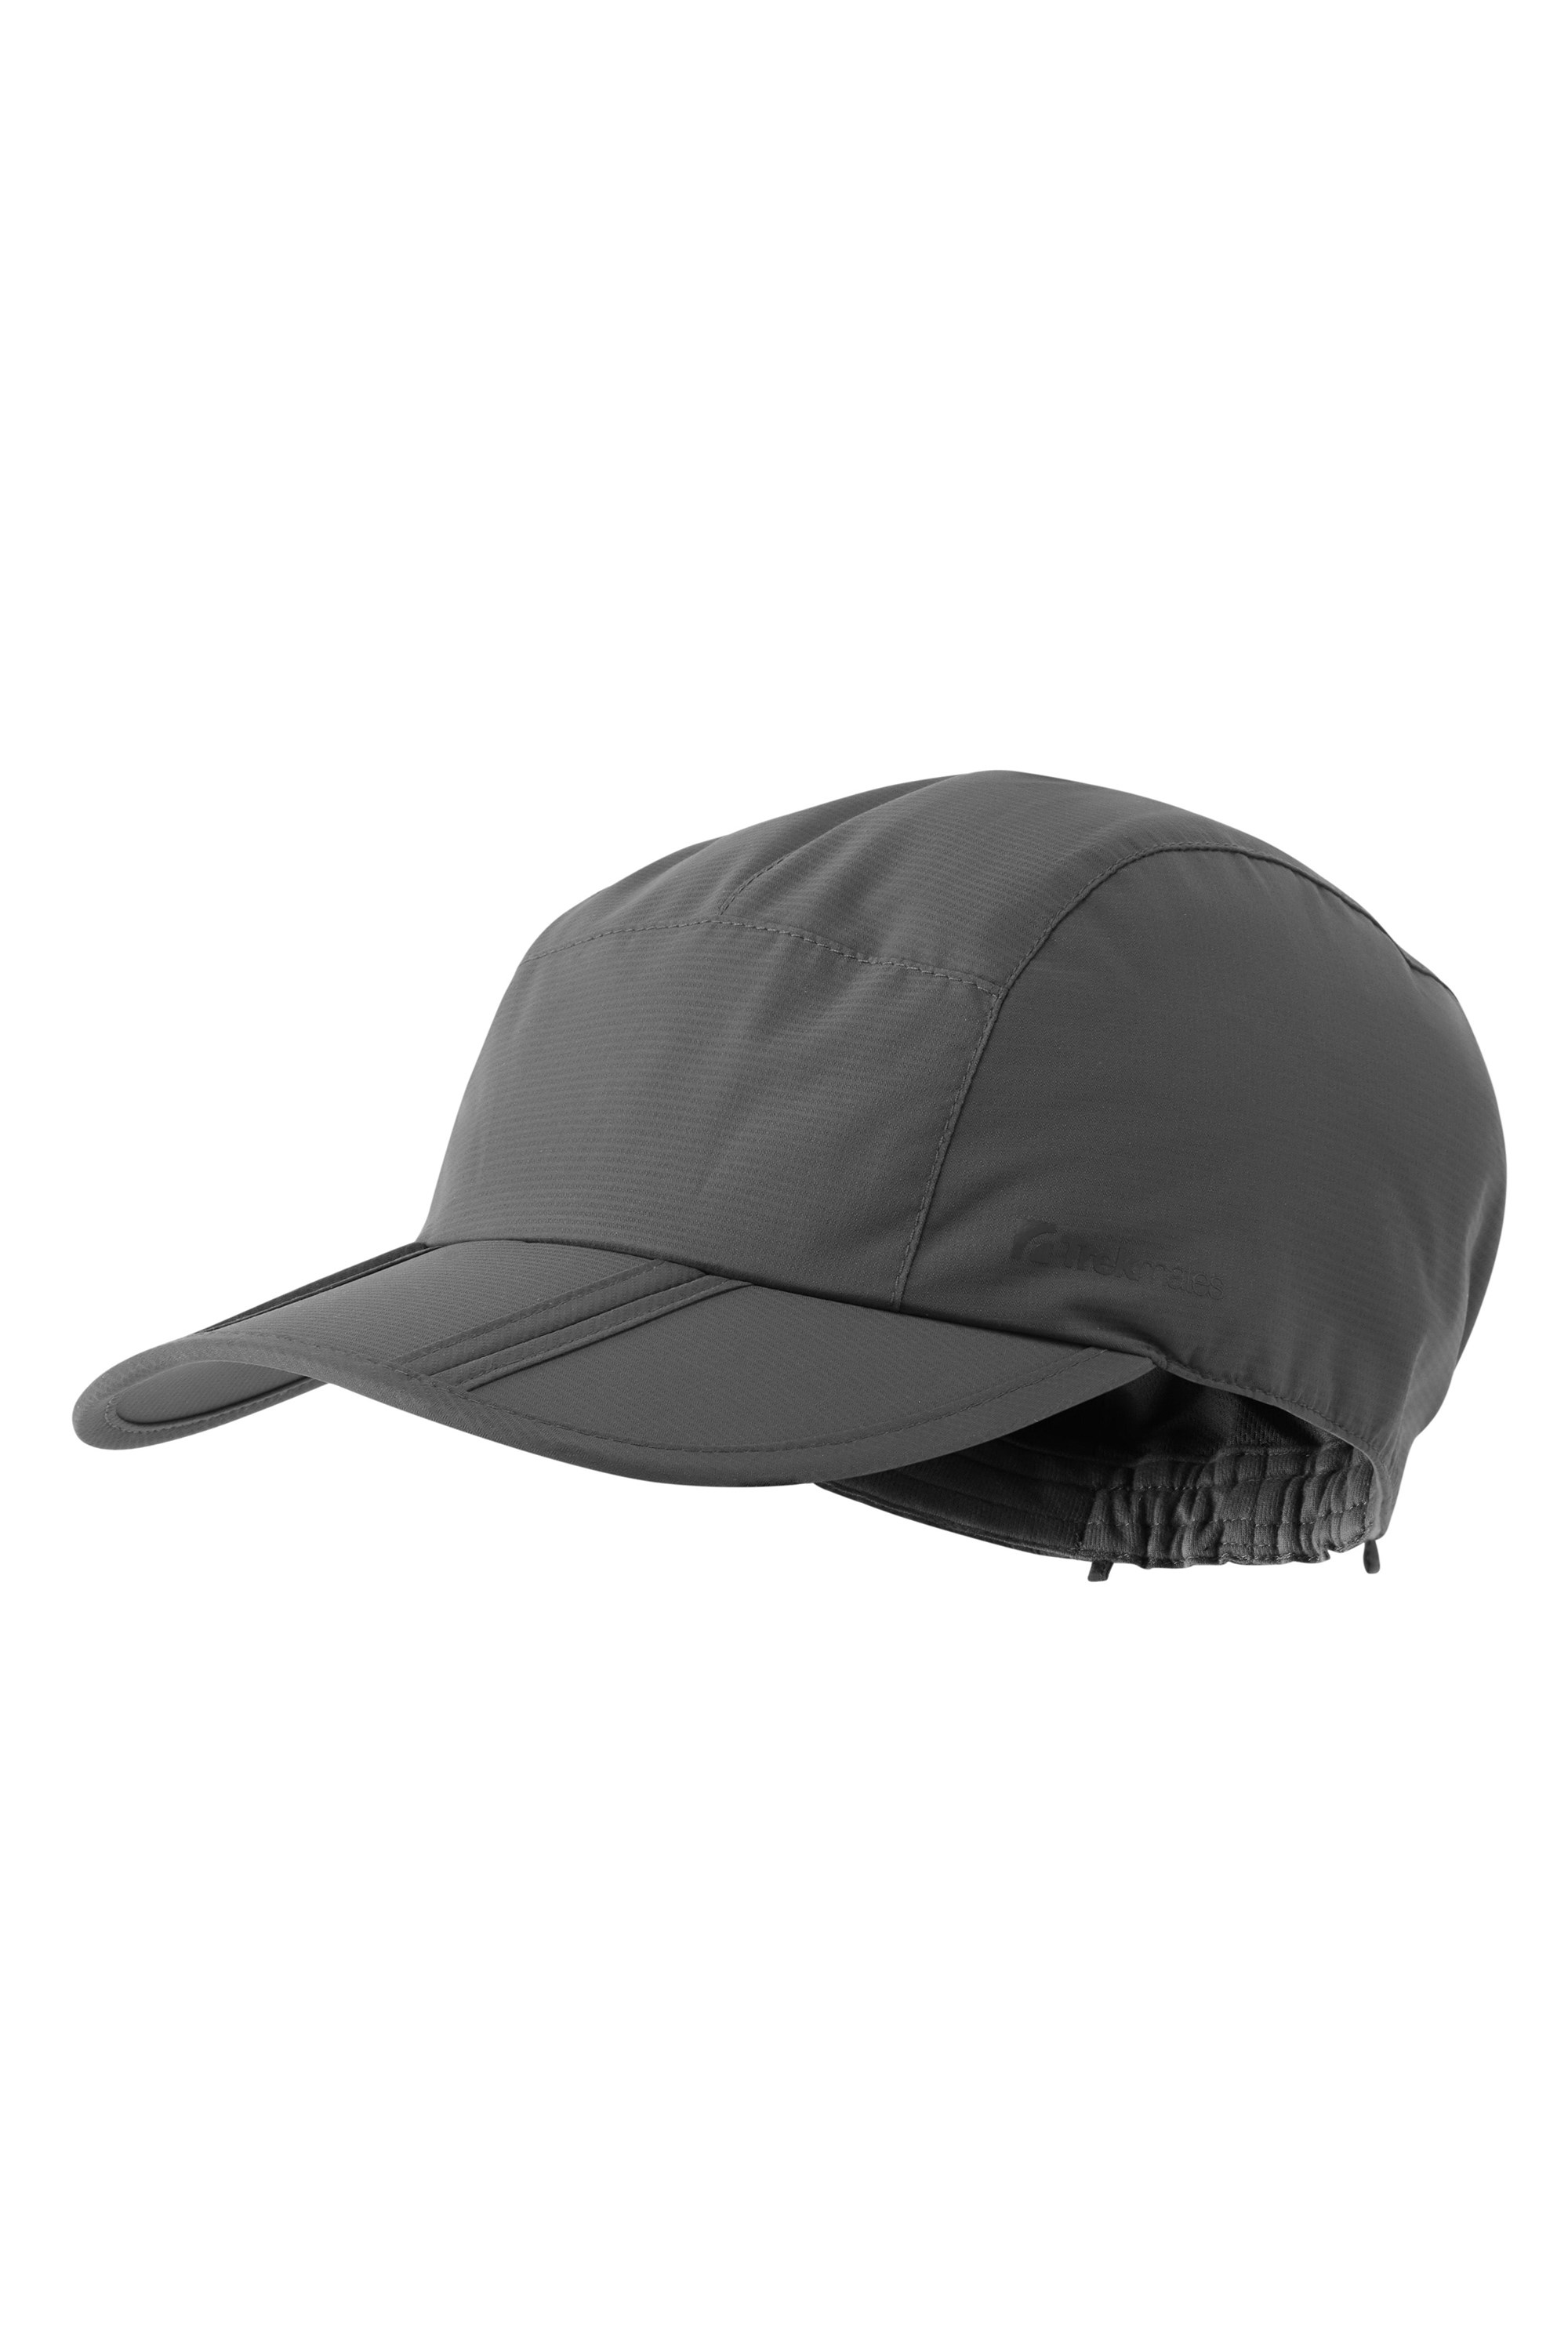 Trekmates Stanage GORE-TEX® Hat | Mountain Warehouse GB